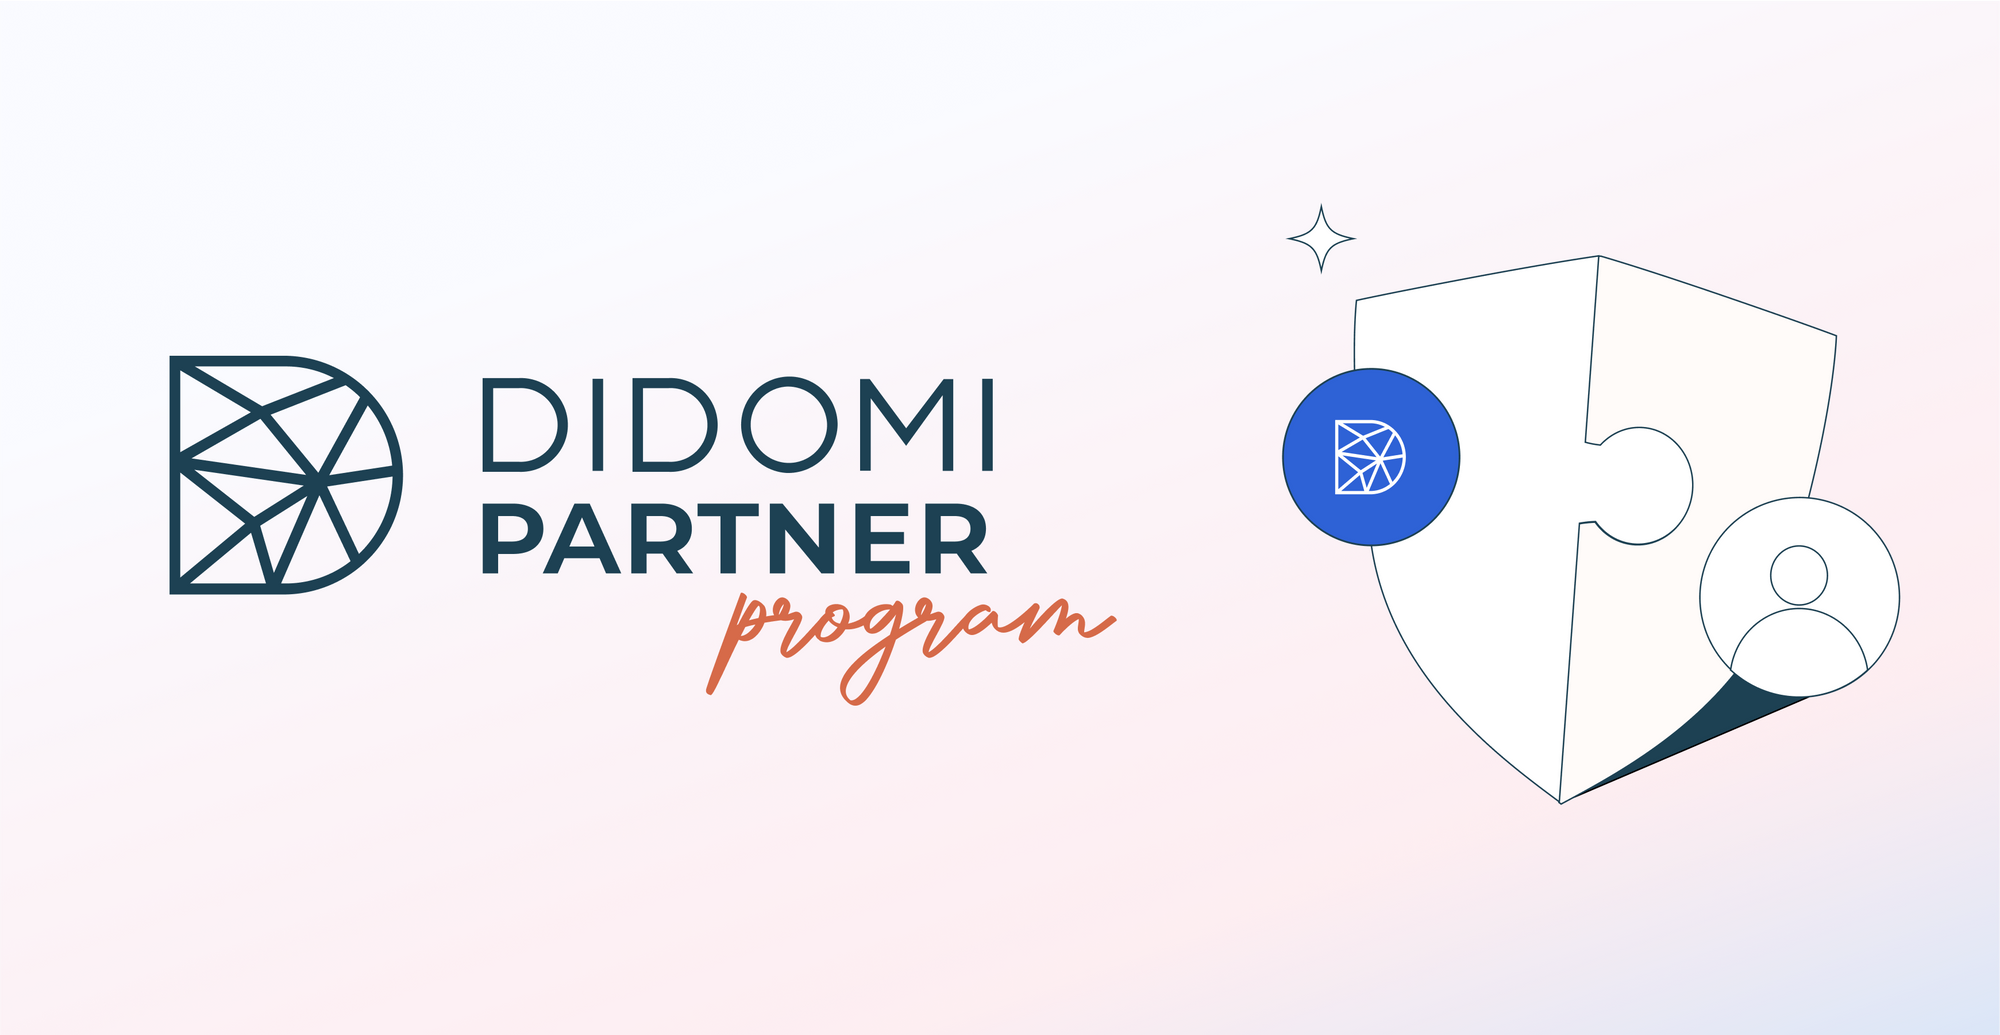 didomi partner program